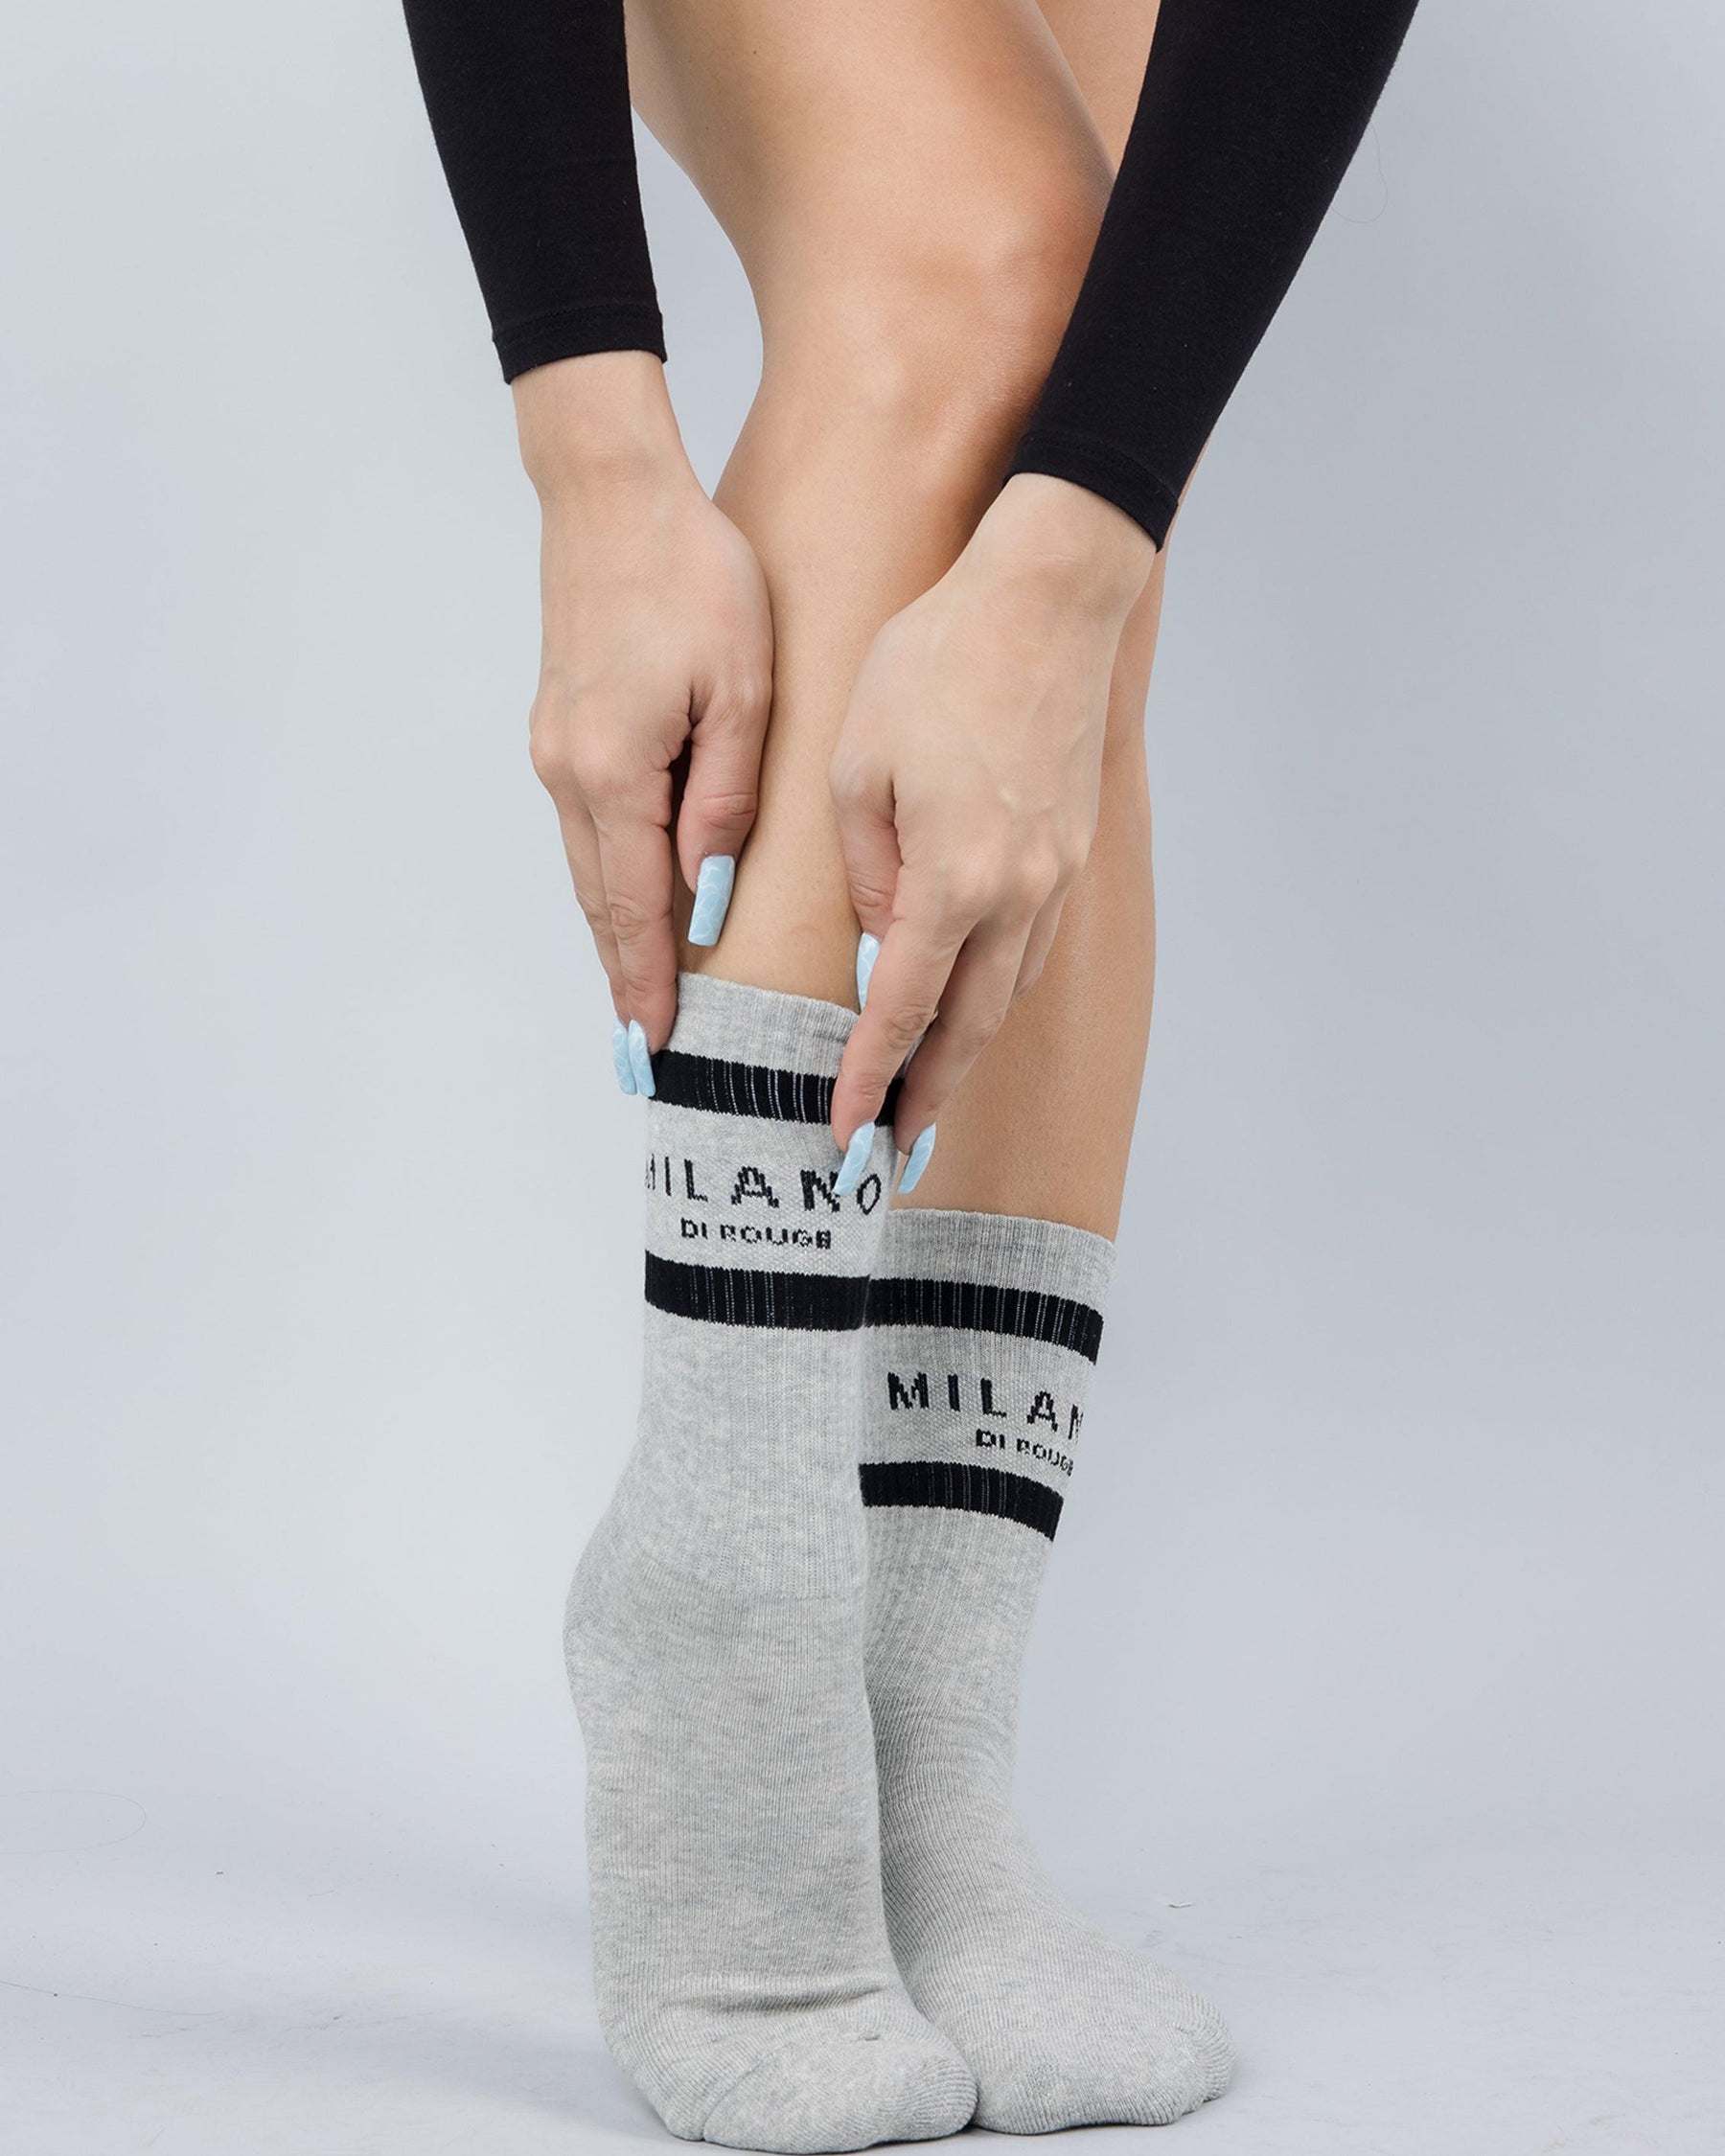 Black Floral Lace Socks  Milano Statement Socks for Women, Sheer